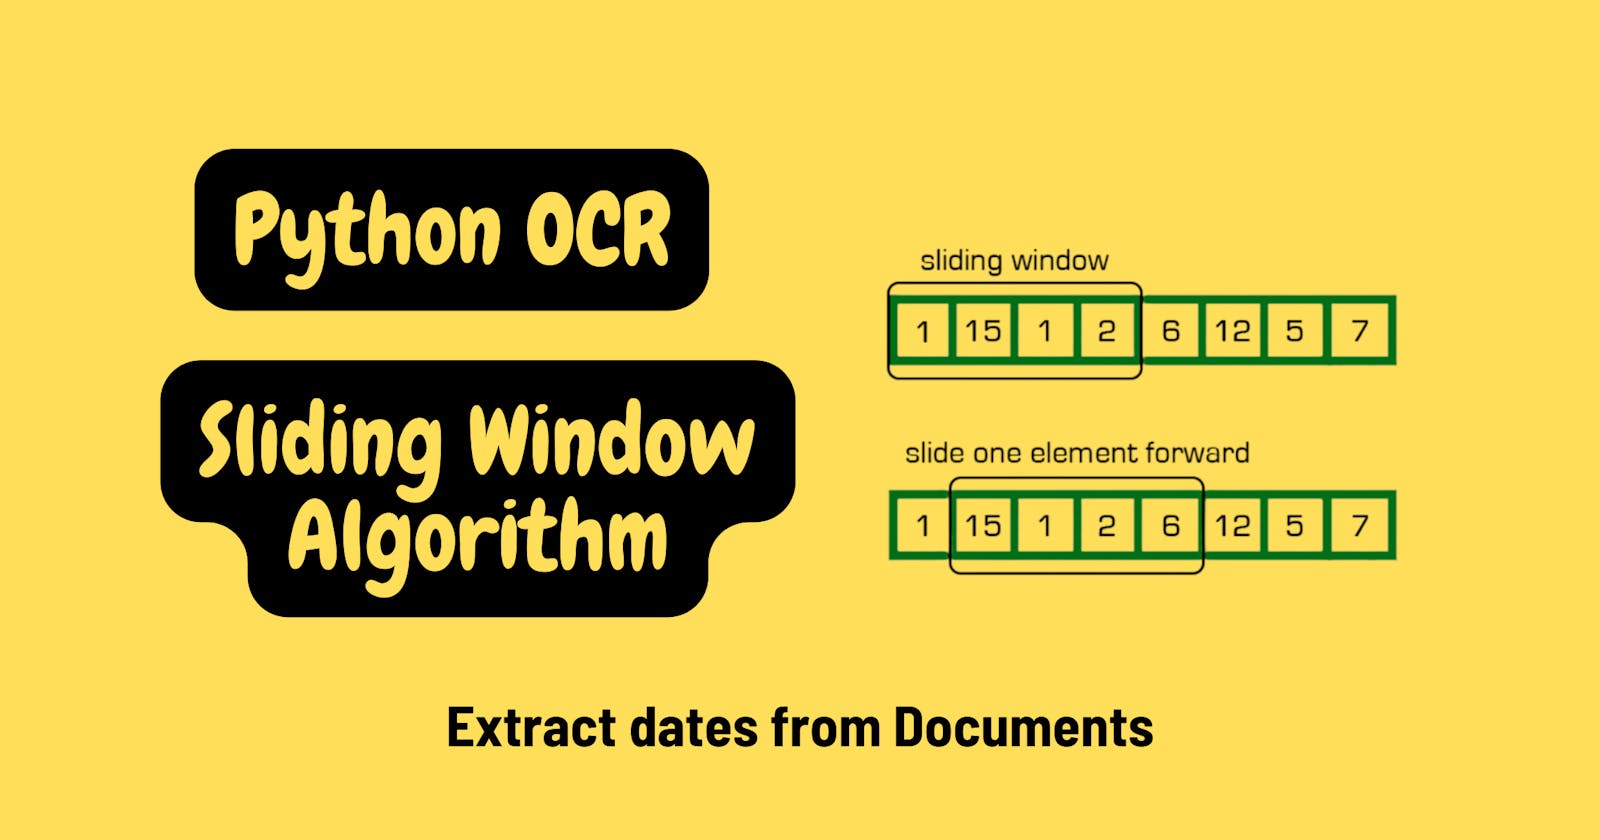 Recognize dates from documents using Sliding Window Algorithm & Python OCR.